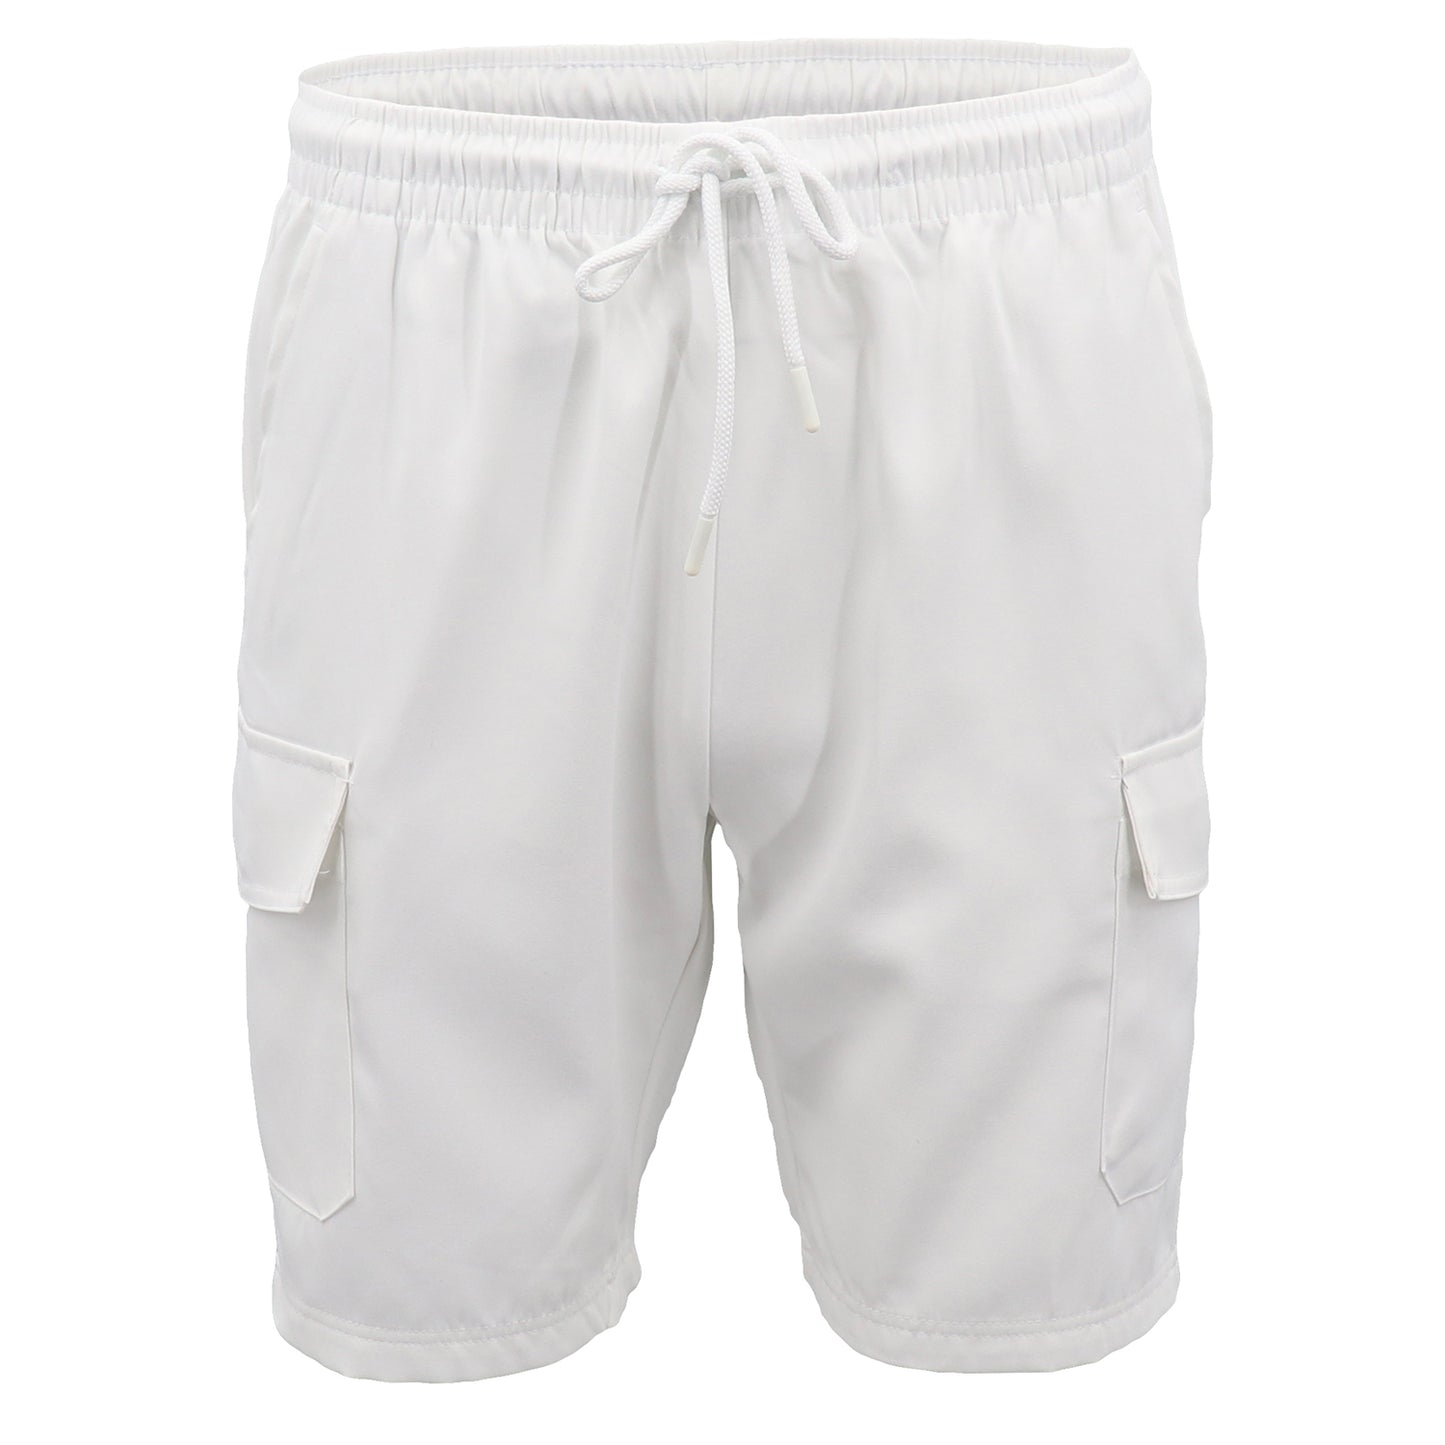 Men's Cargo Shorts 4 Pockets Cascual Work Trousers Active Pants Elastic Waist, Navy, S